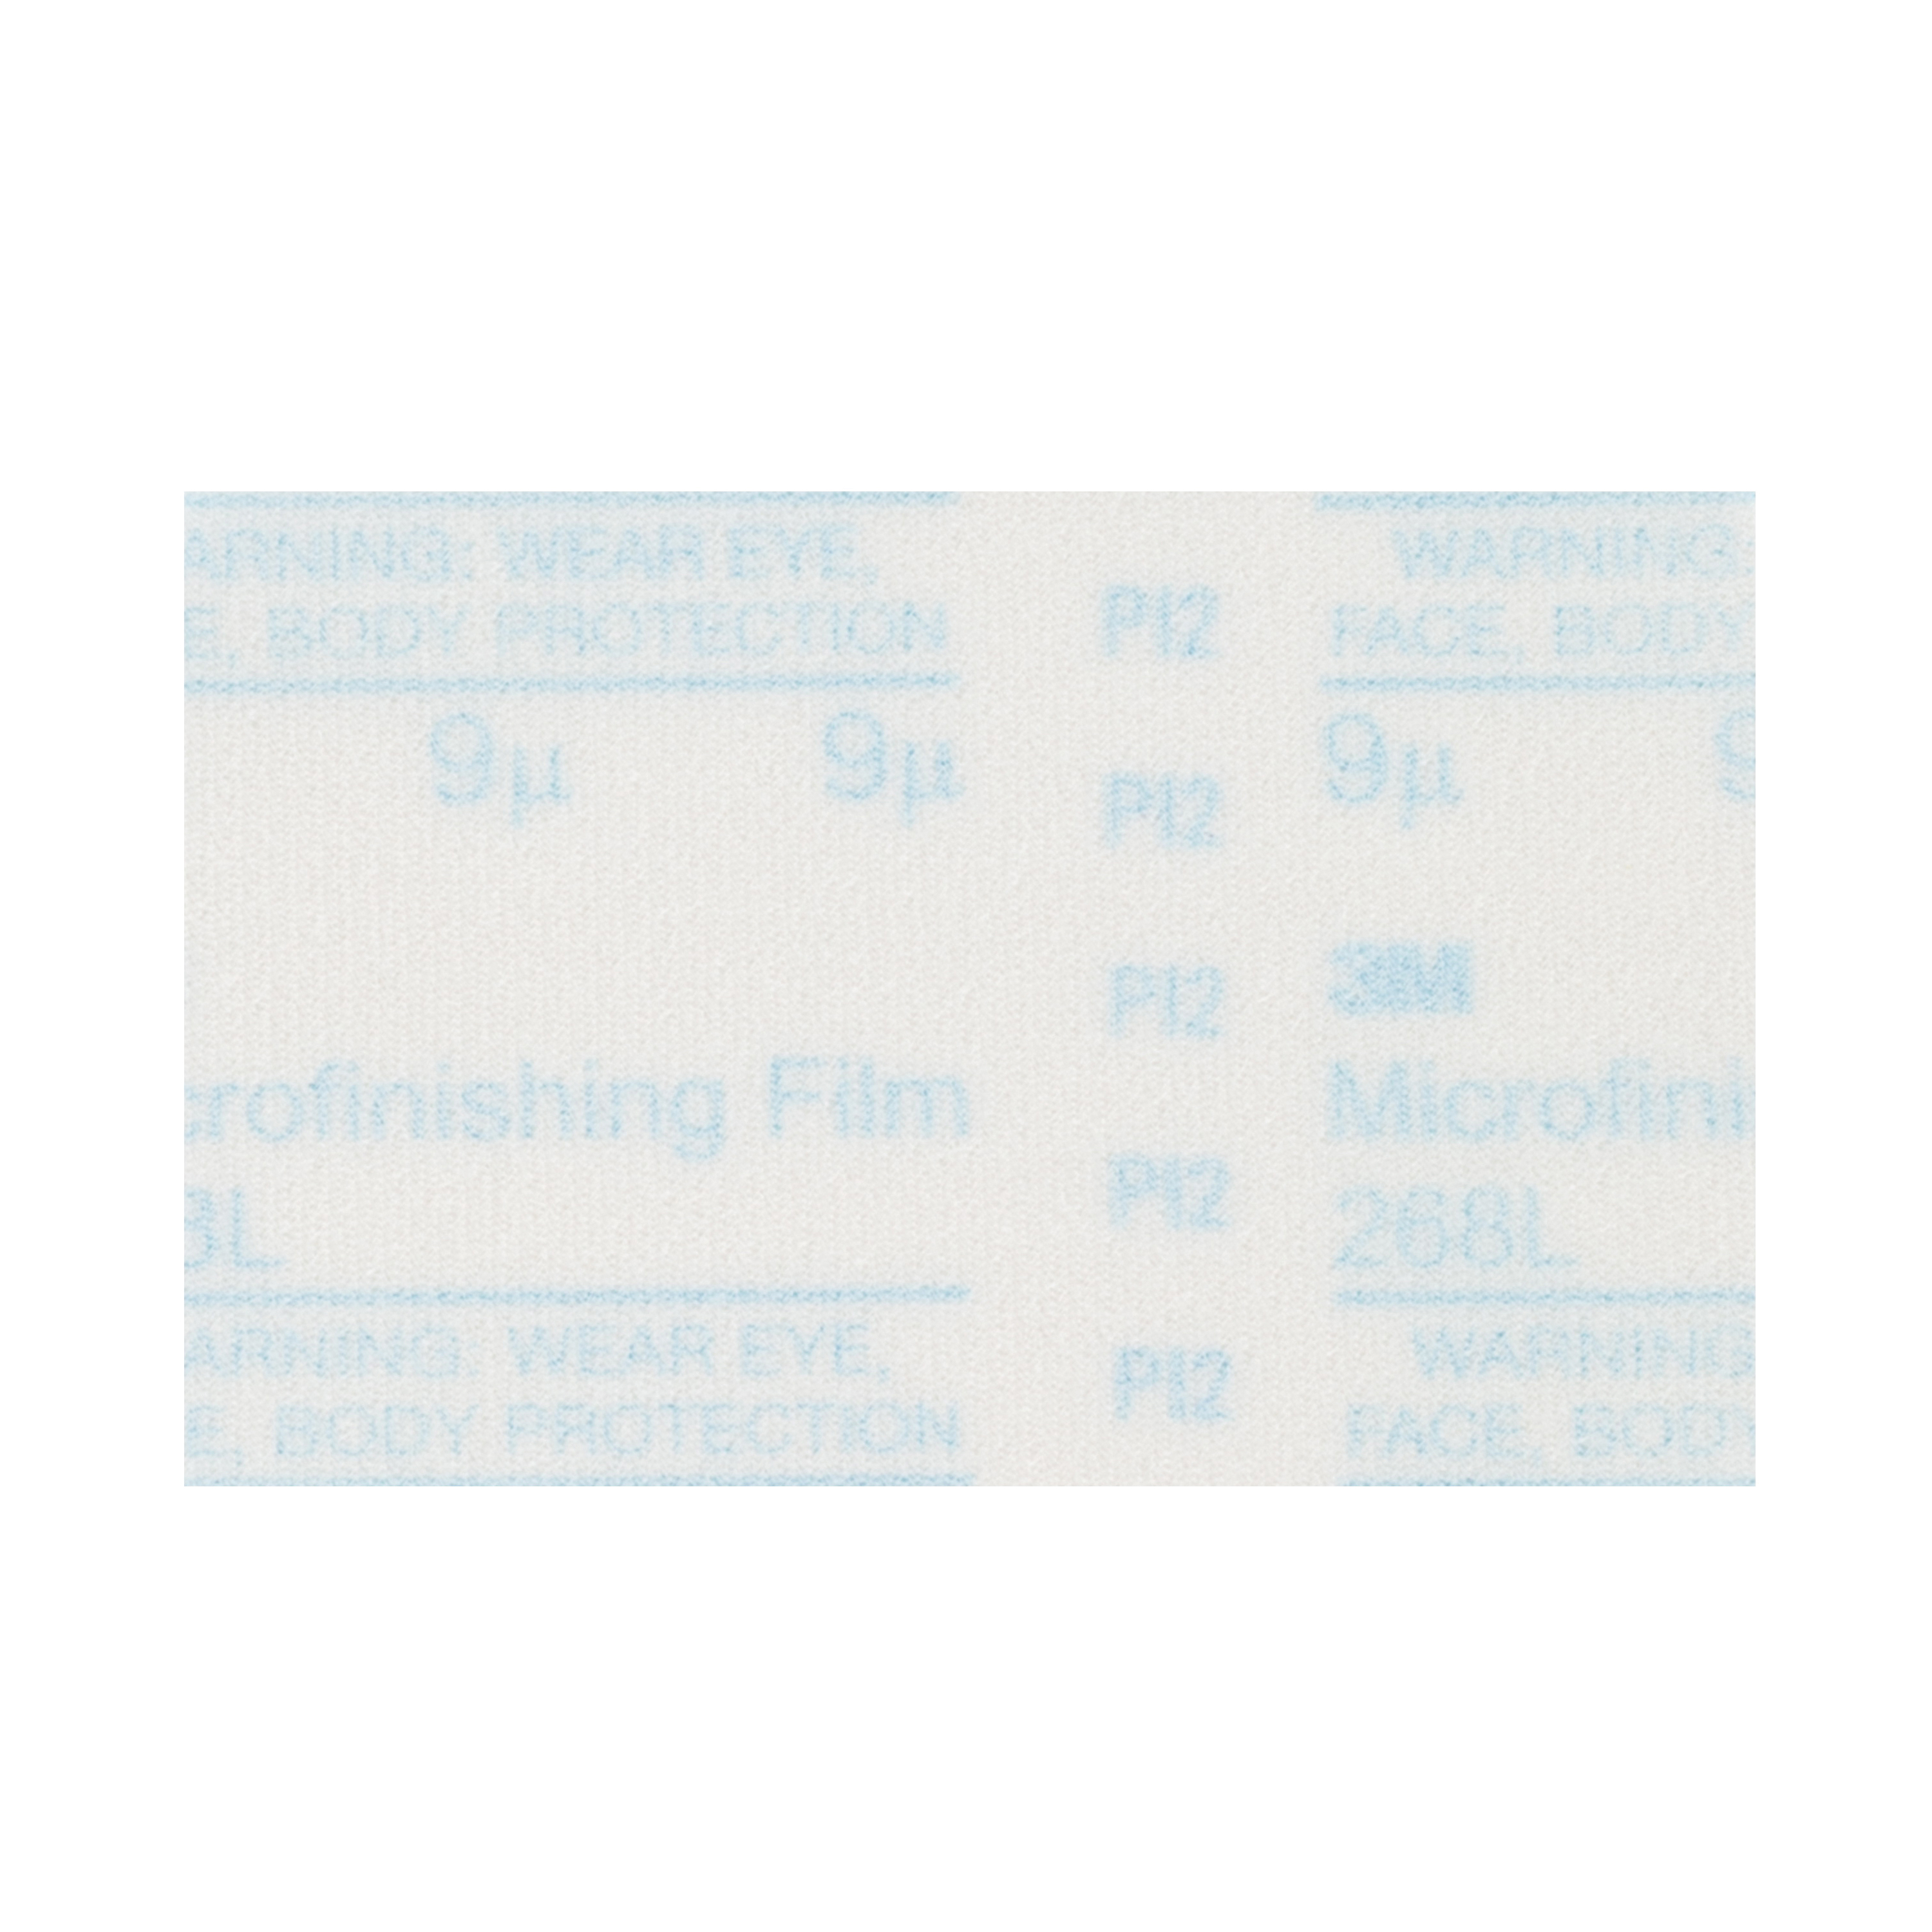 3M™ 051144-14972 268L Type D Microfinishing PSA Carbide Burr, 5 in Dia Disc, 9 micron Grit, Ultra Fine Grade, Aluminum Oxide Abrasive, Polyester Film Backing